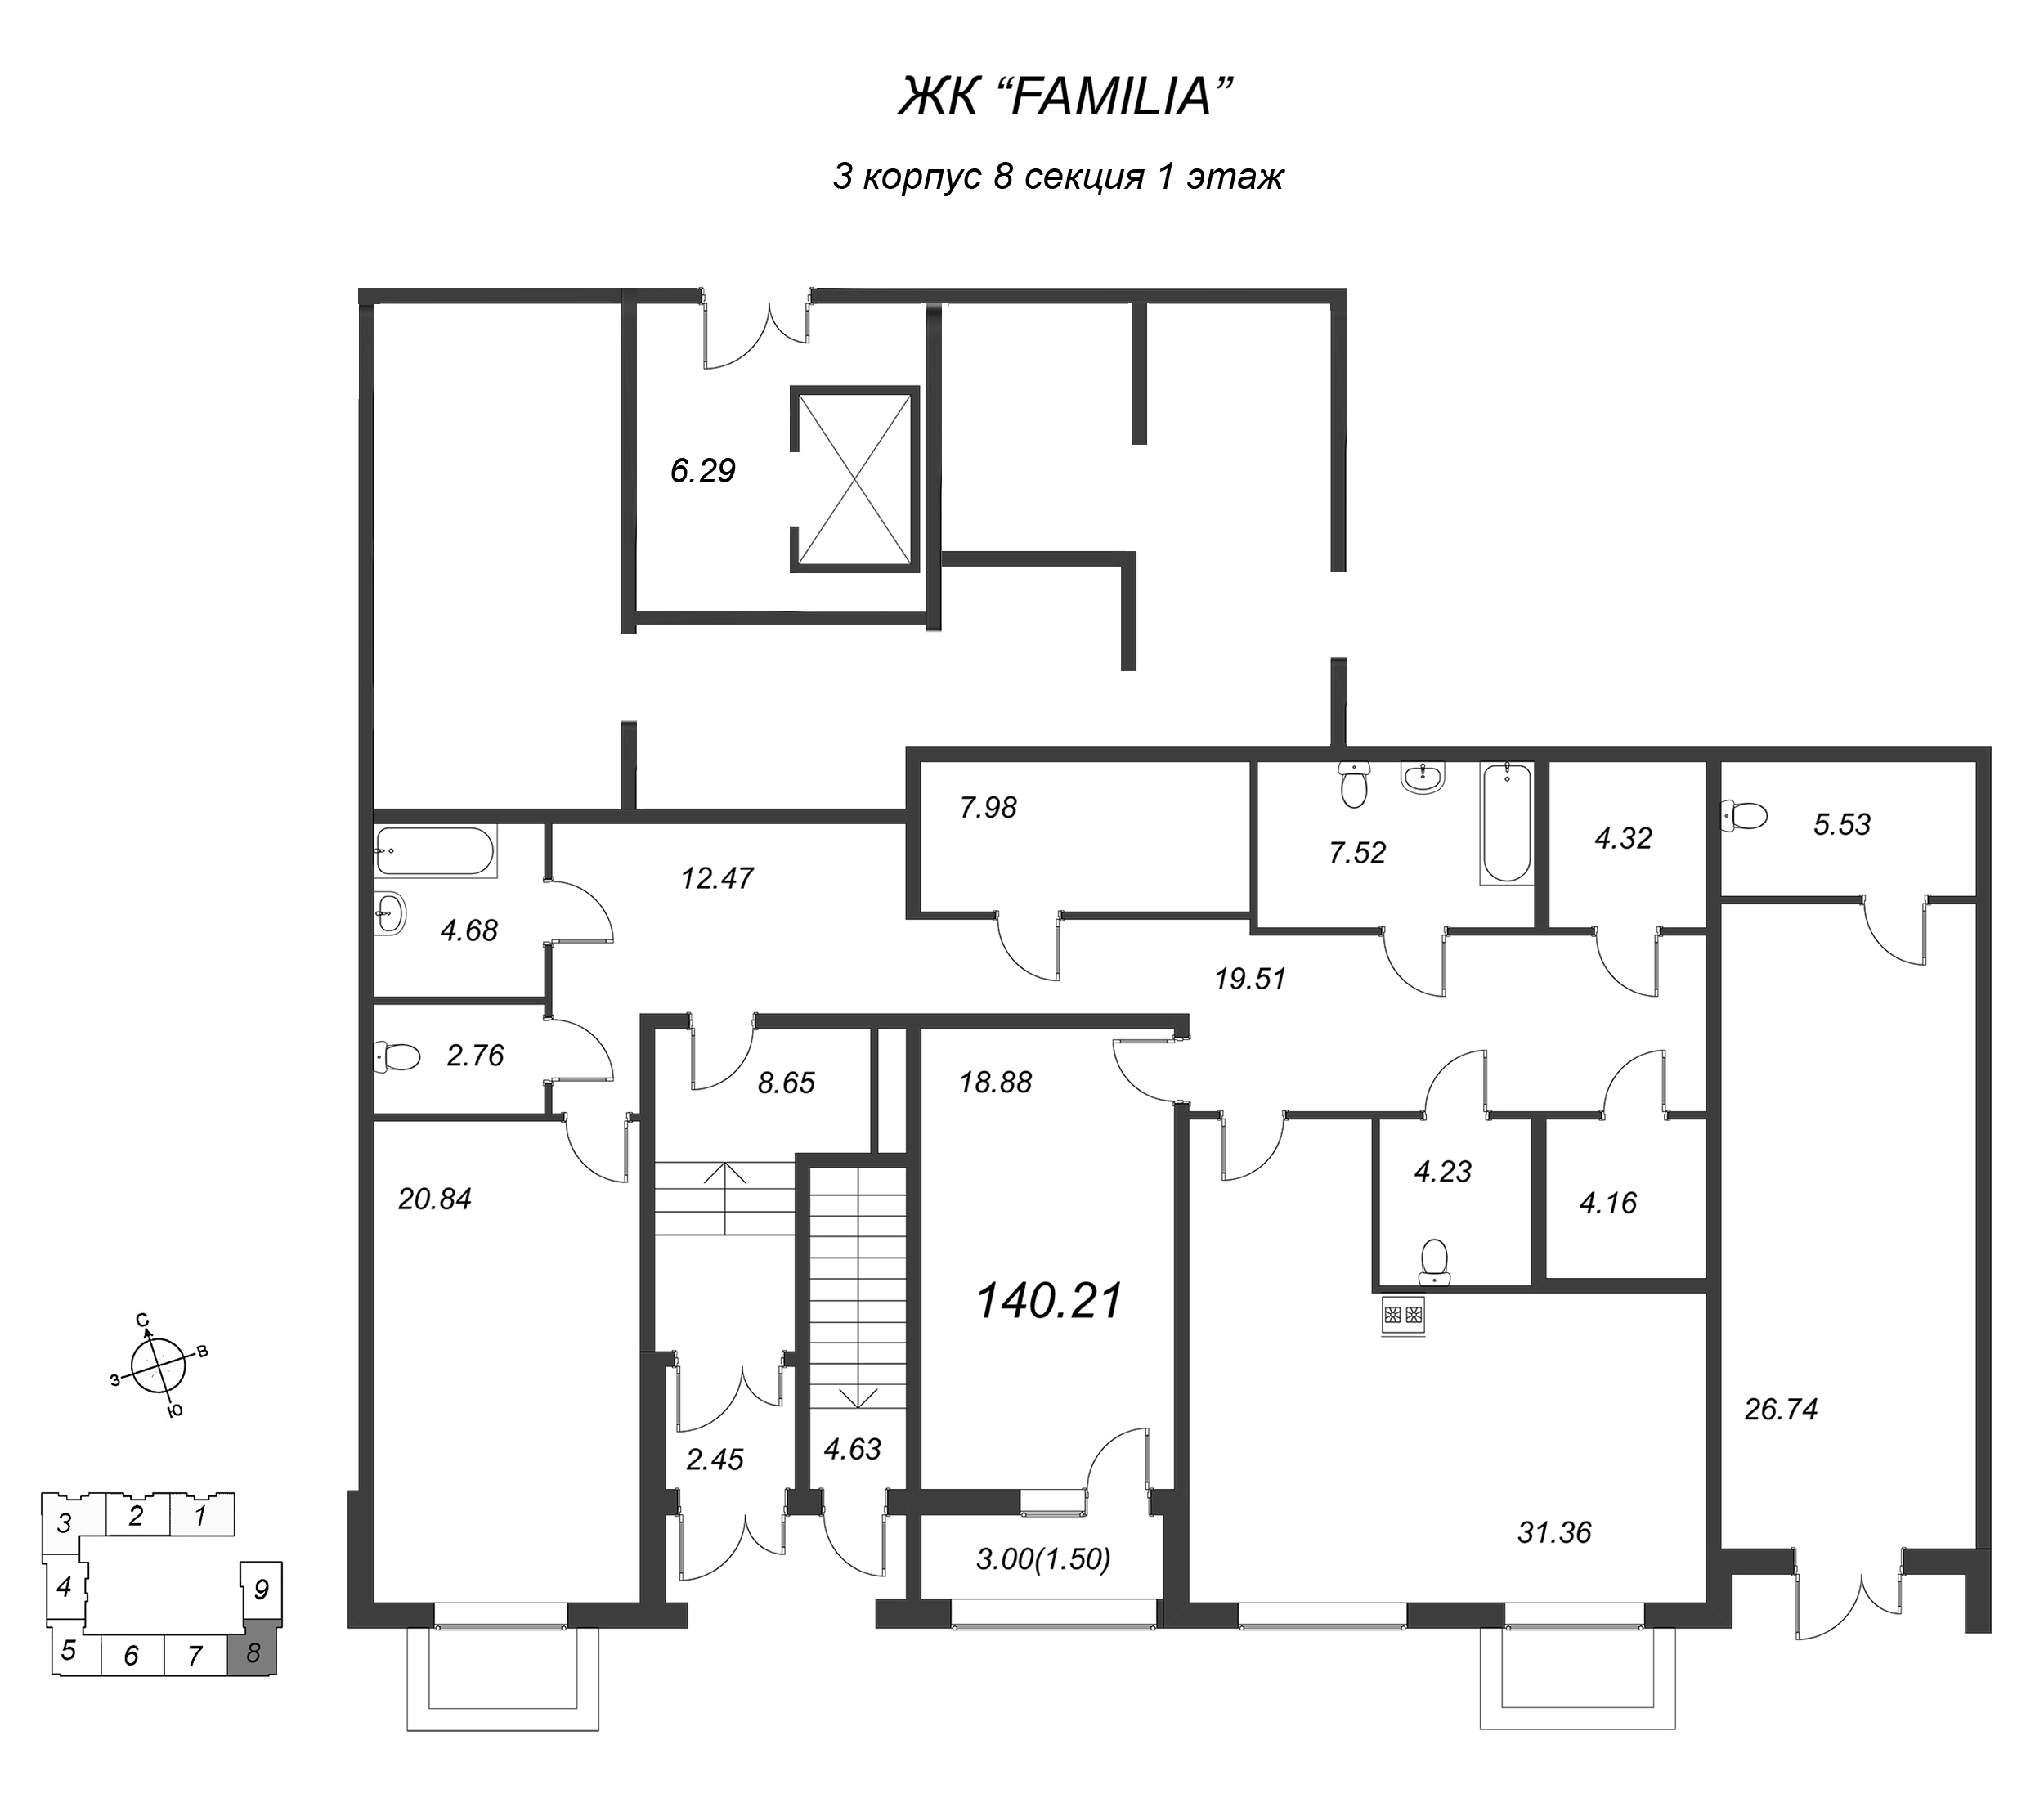 2-комнатная квартира, 140.3 м² в ЖК "FAMILIA" - планировка этажа